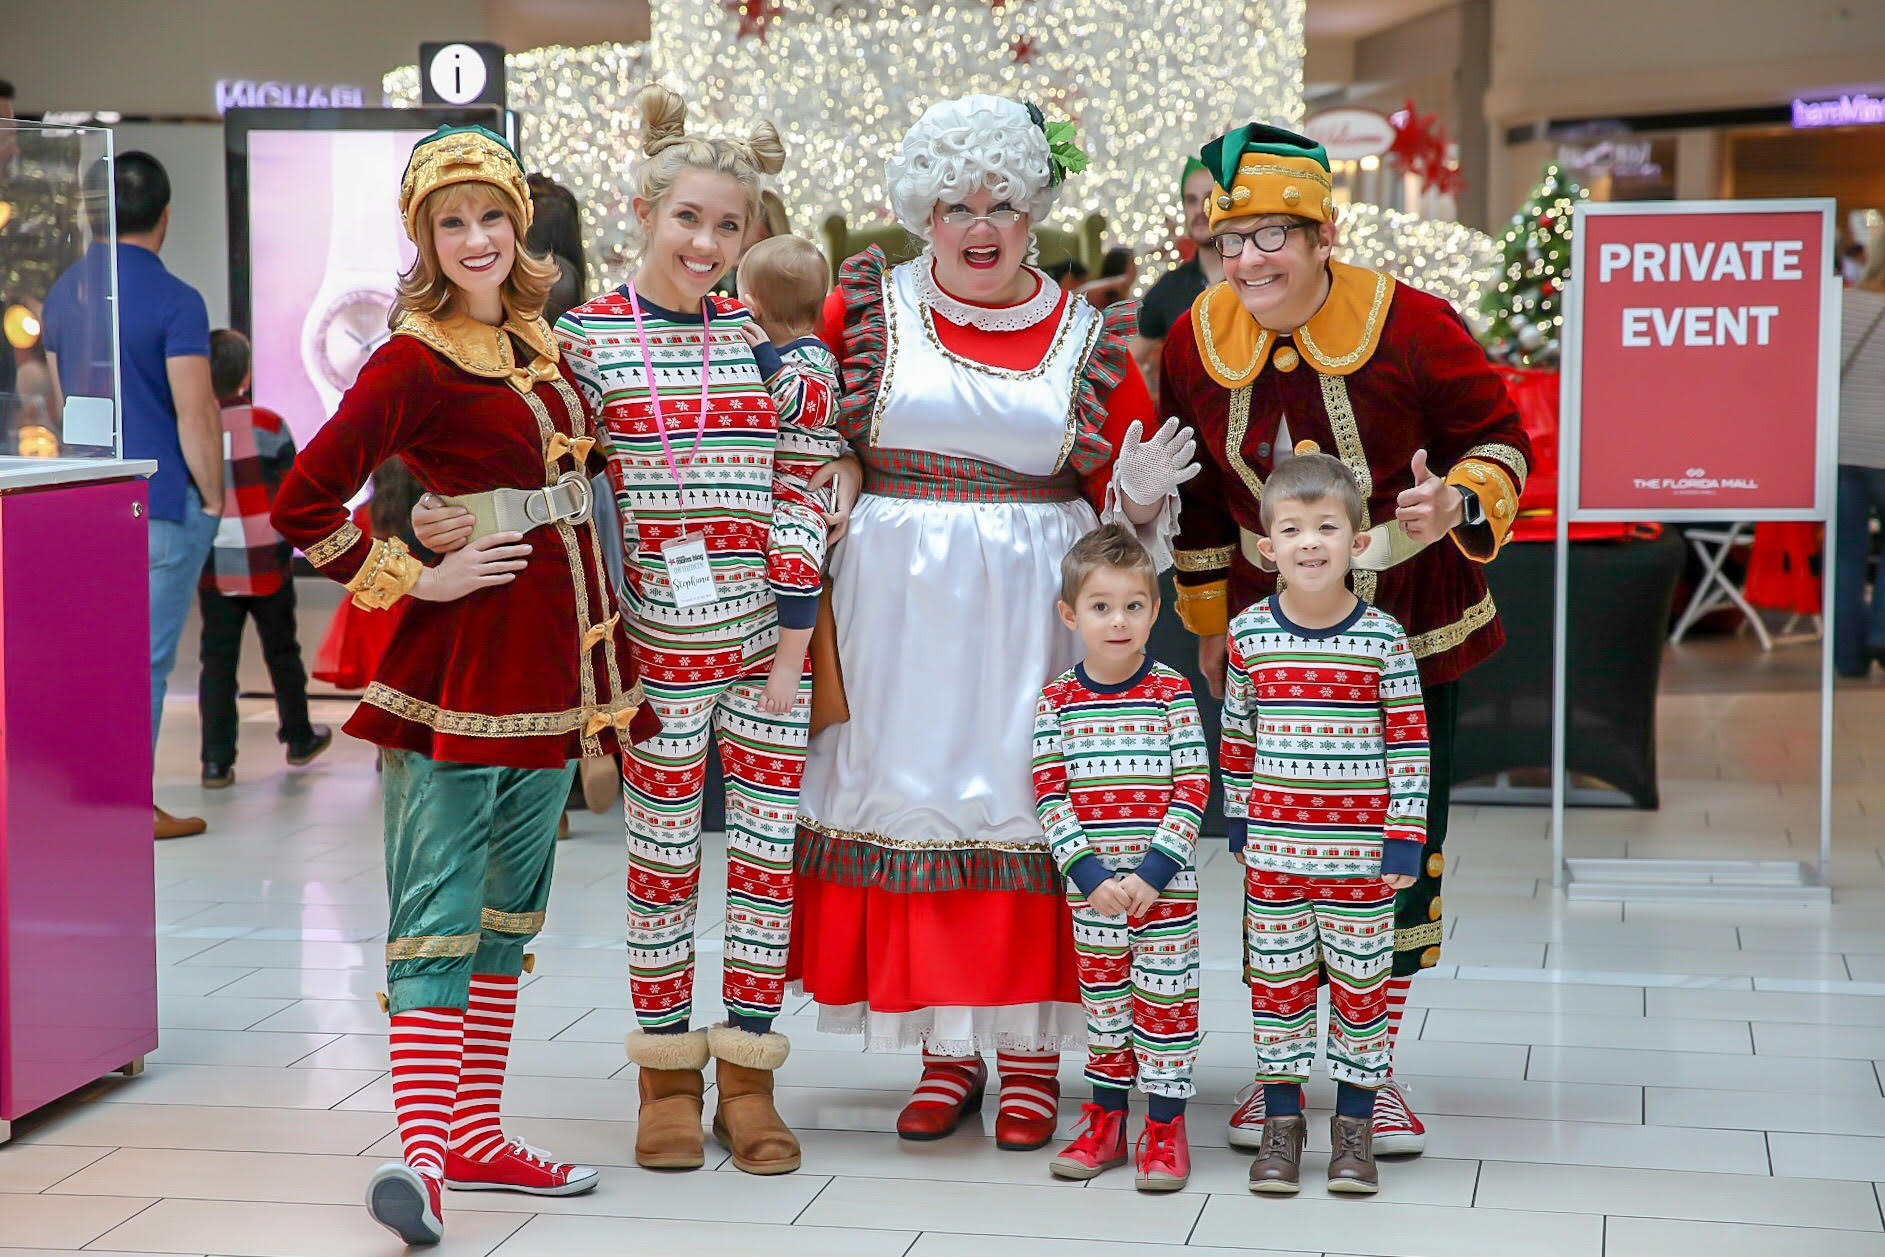 Matching Christmas Family Pajamas GIFT GUIDE for KIDS!! Breakfast with Santa and Photos with Santa at The Florida Mall #floridamall #matchingchristmaspjs #familypajamas #photoswithsanta #santaphotos @thefloridamall @orlandomomsblog